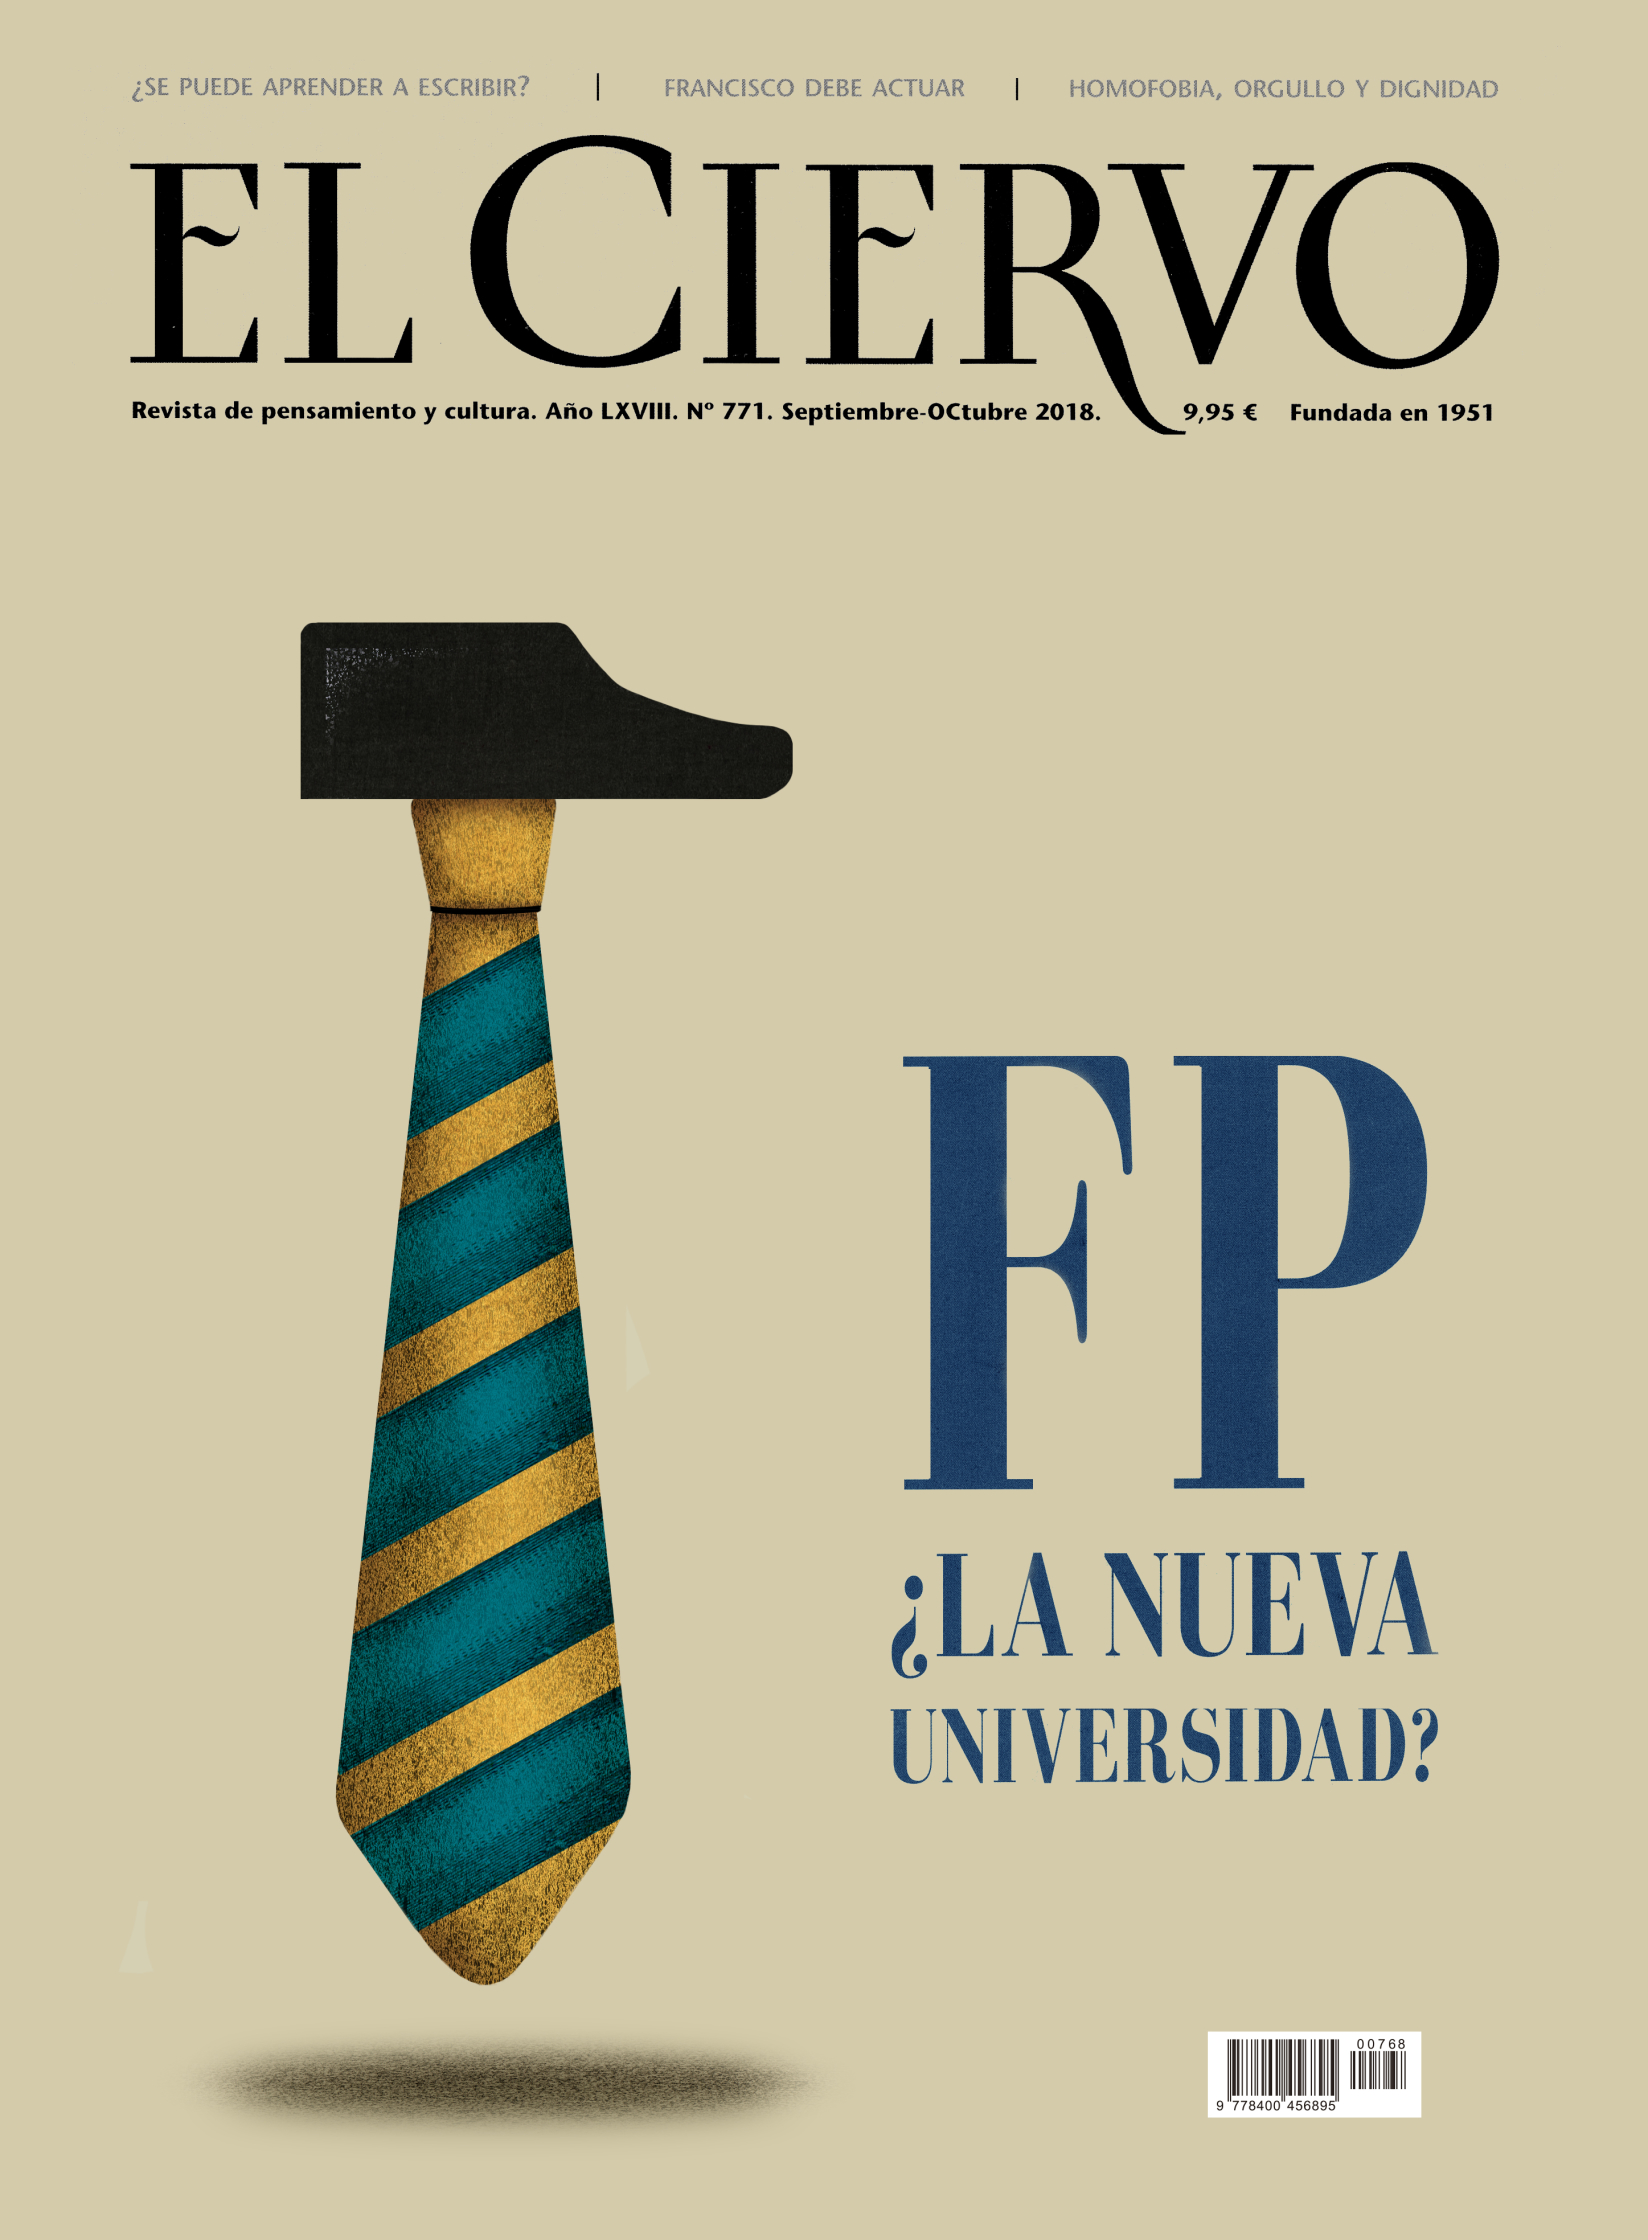 Cover for El Ciervo Magazine 2.jpg